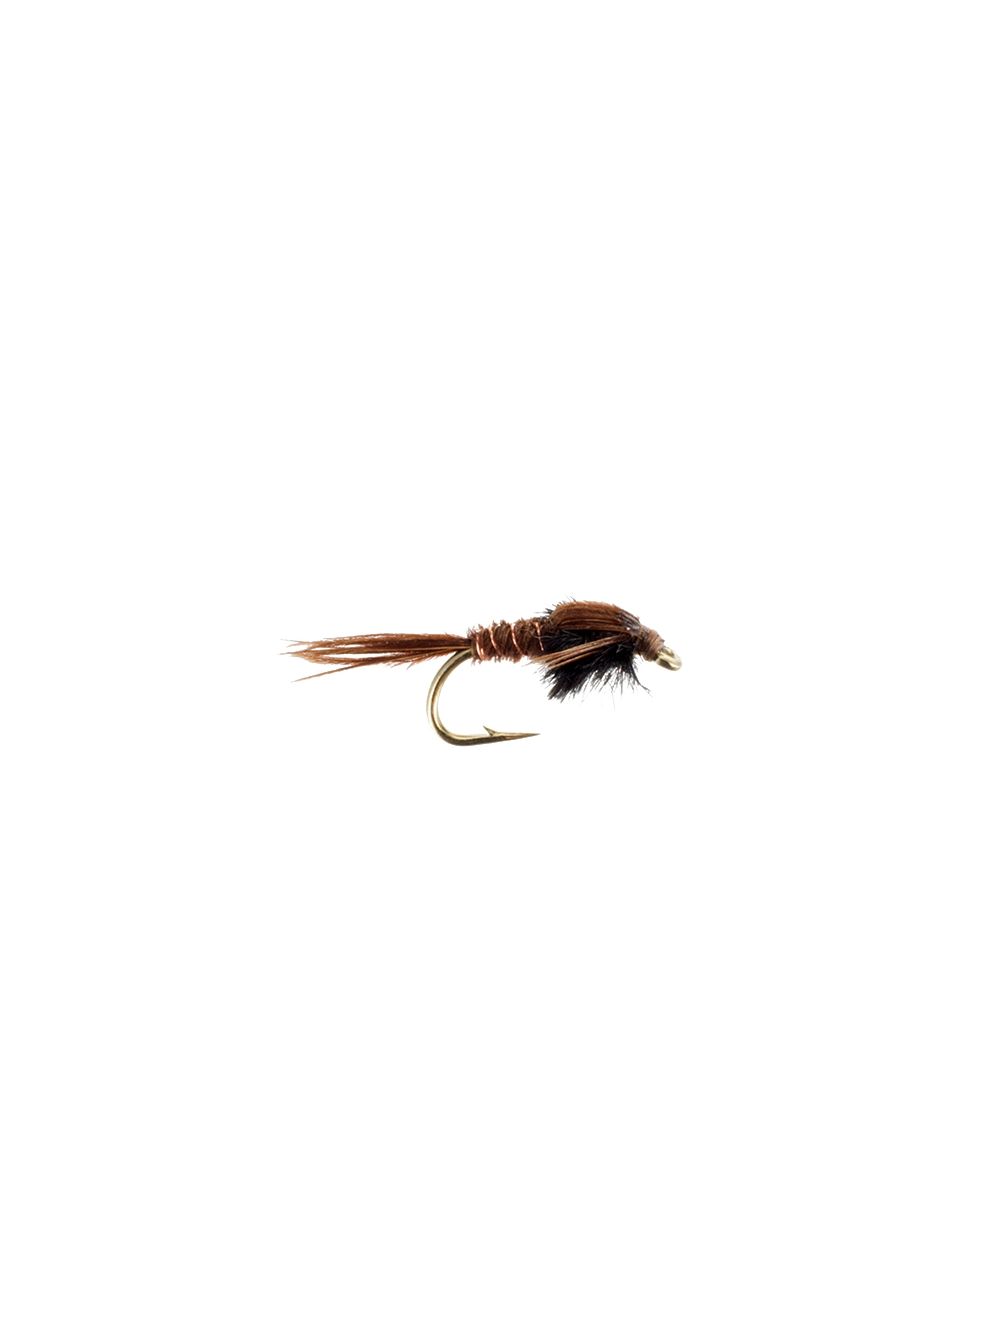 https://eadn-wc02-1020161.nxedge.io/cdn/media/catalog/product/cache/32b930e20bfef0c9badd7ee253a86131/p/t/pto-fly-fishing-flies-nymphs_1.jpg